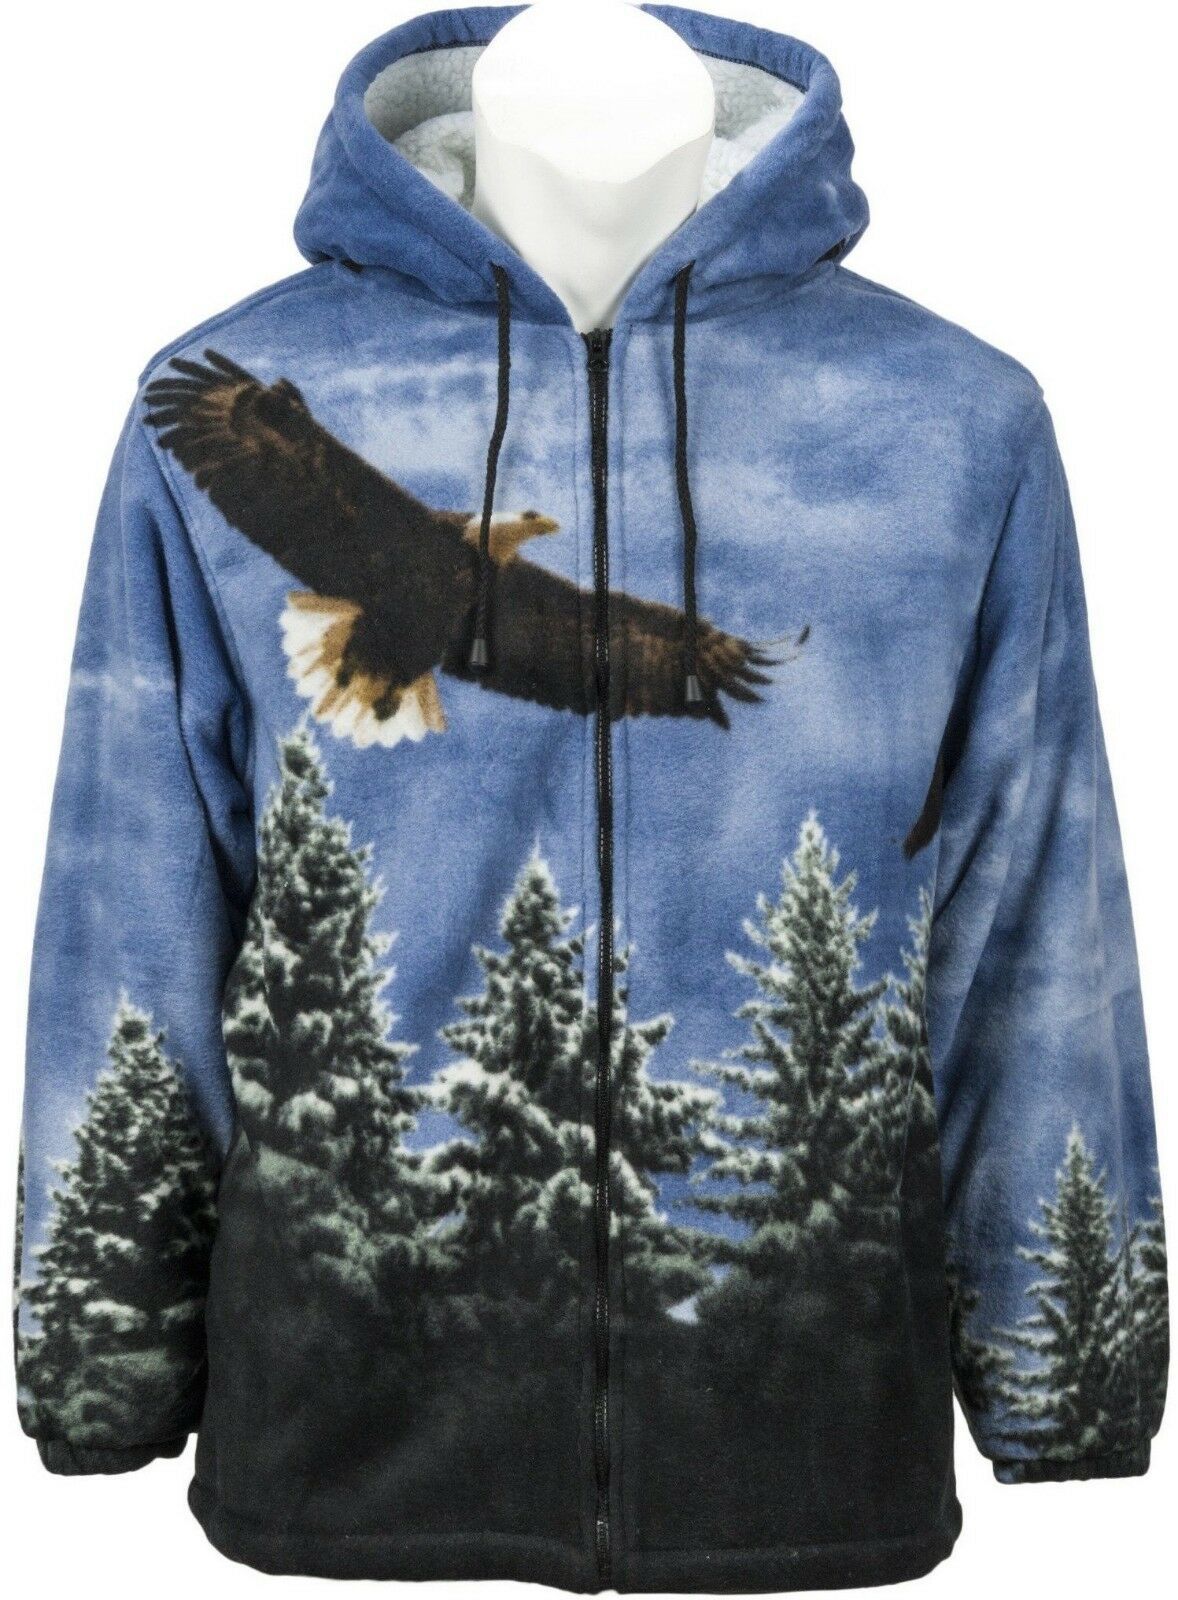 TrailCrest Eagle Bird Scout Animal Flight Jacket Sweater Unisex Blue Hoodie S-L